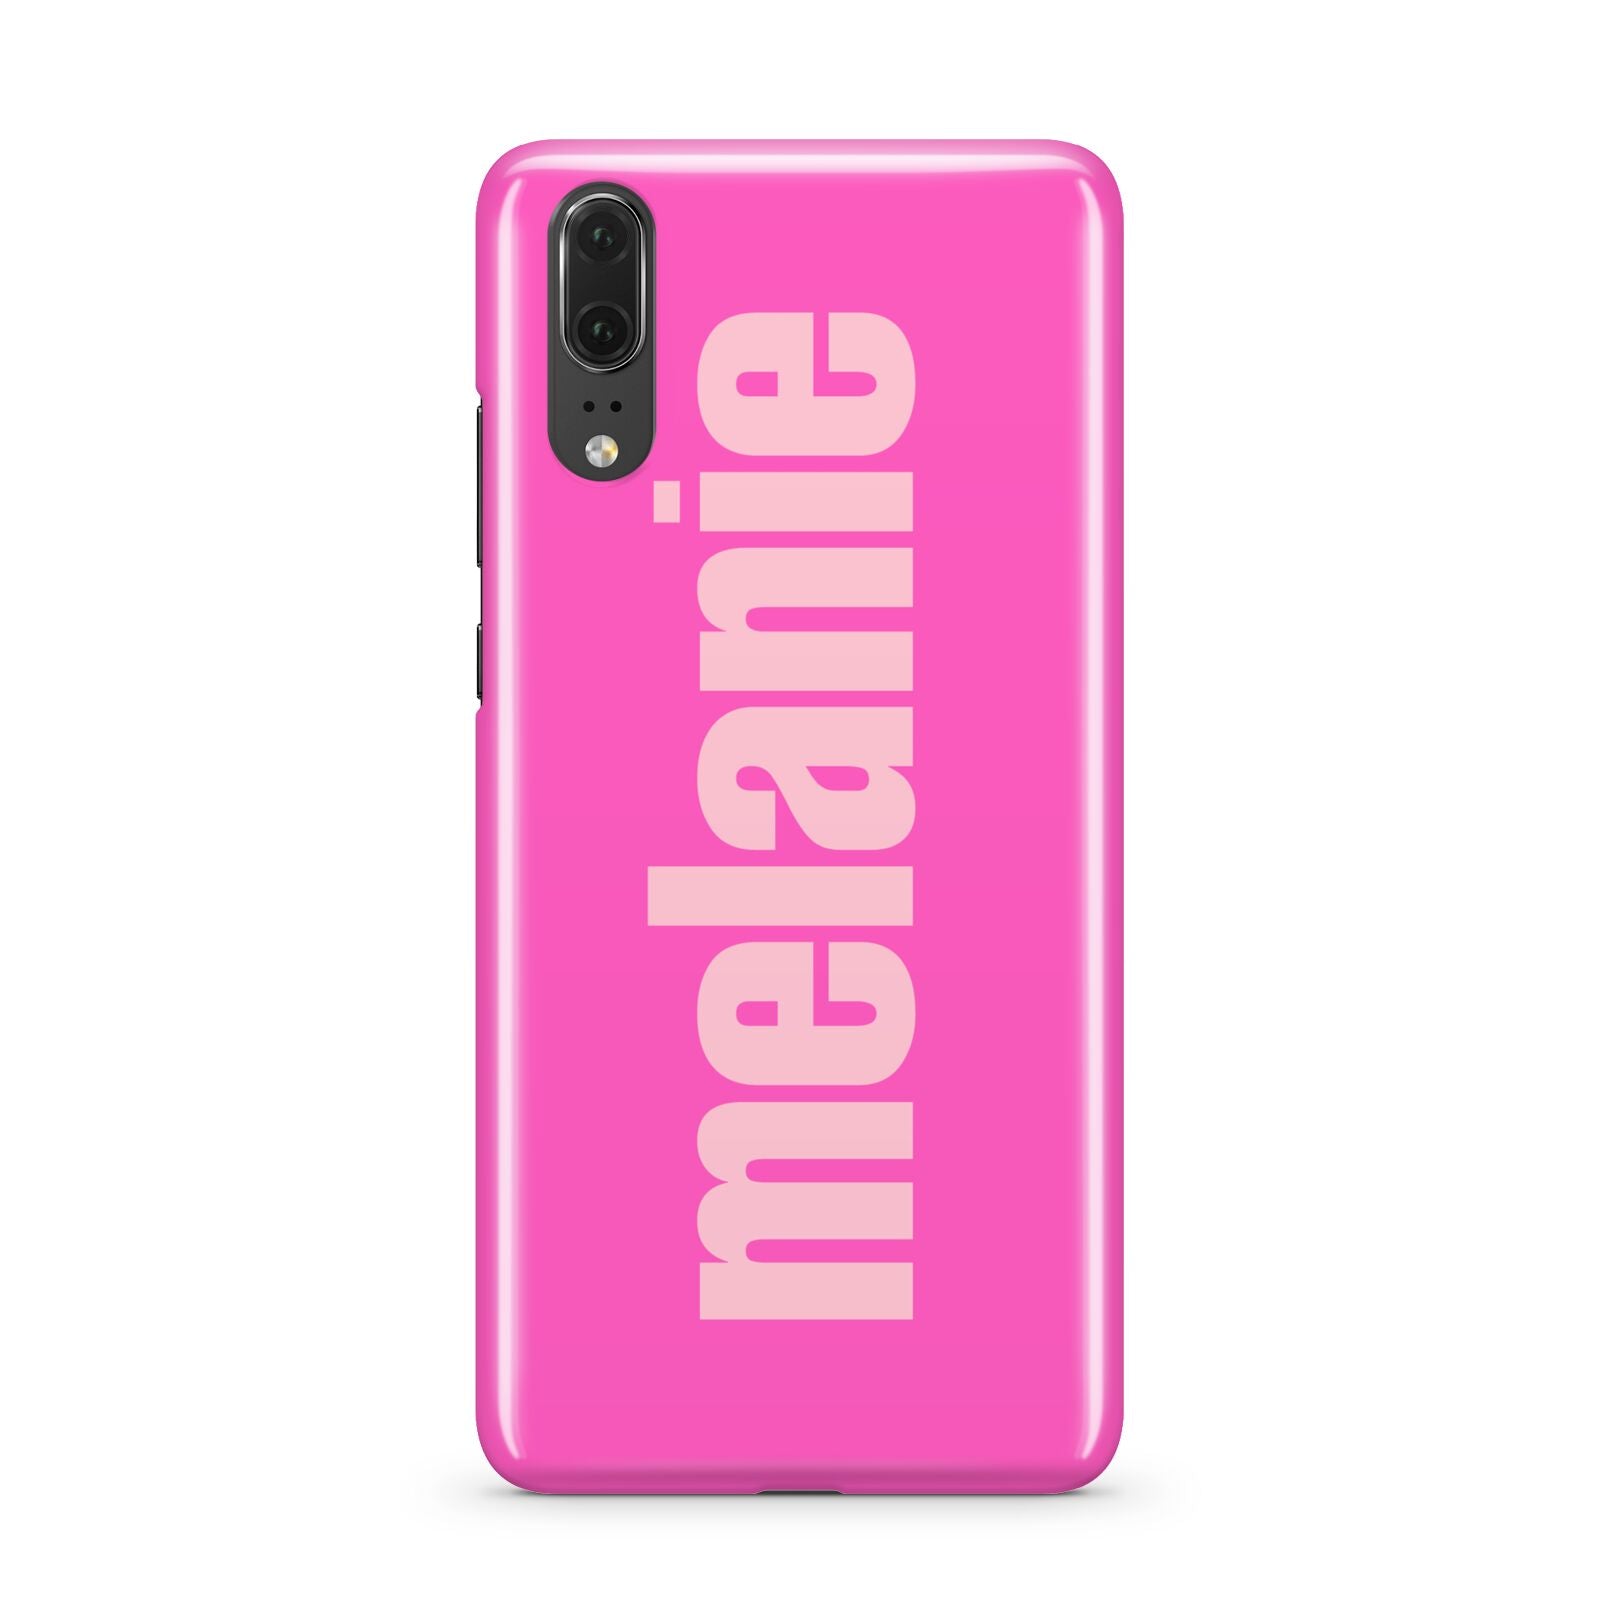 Personalised Pink Huawei P20 Phone Case